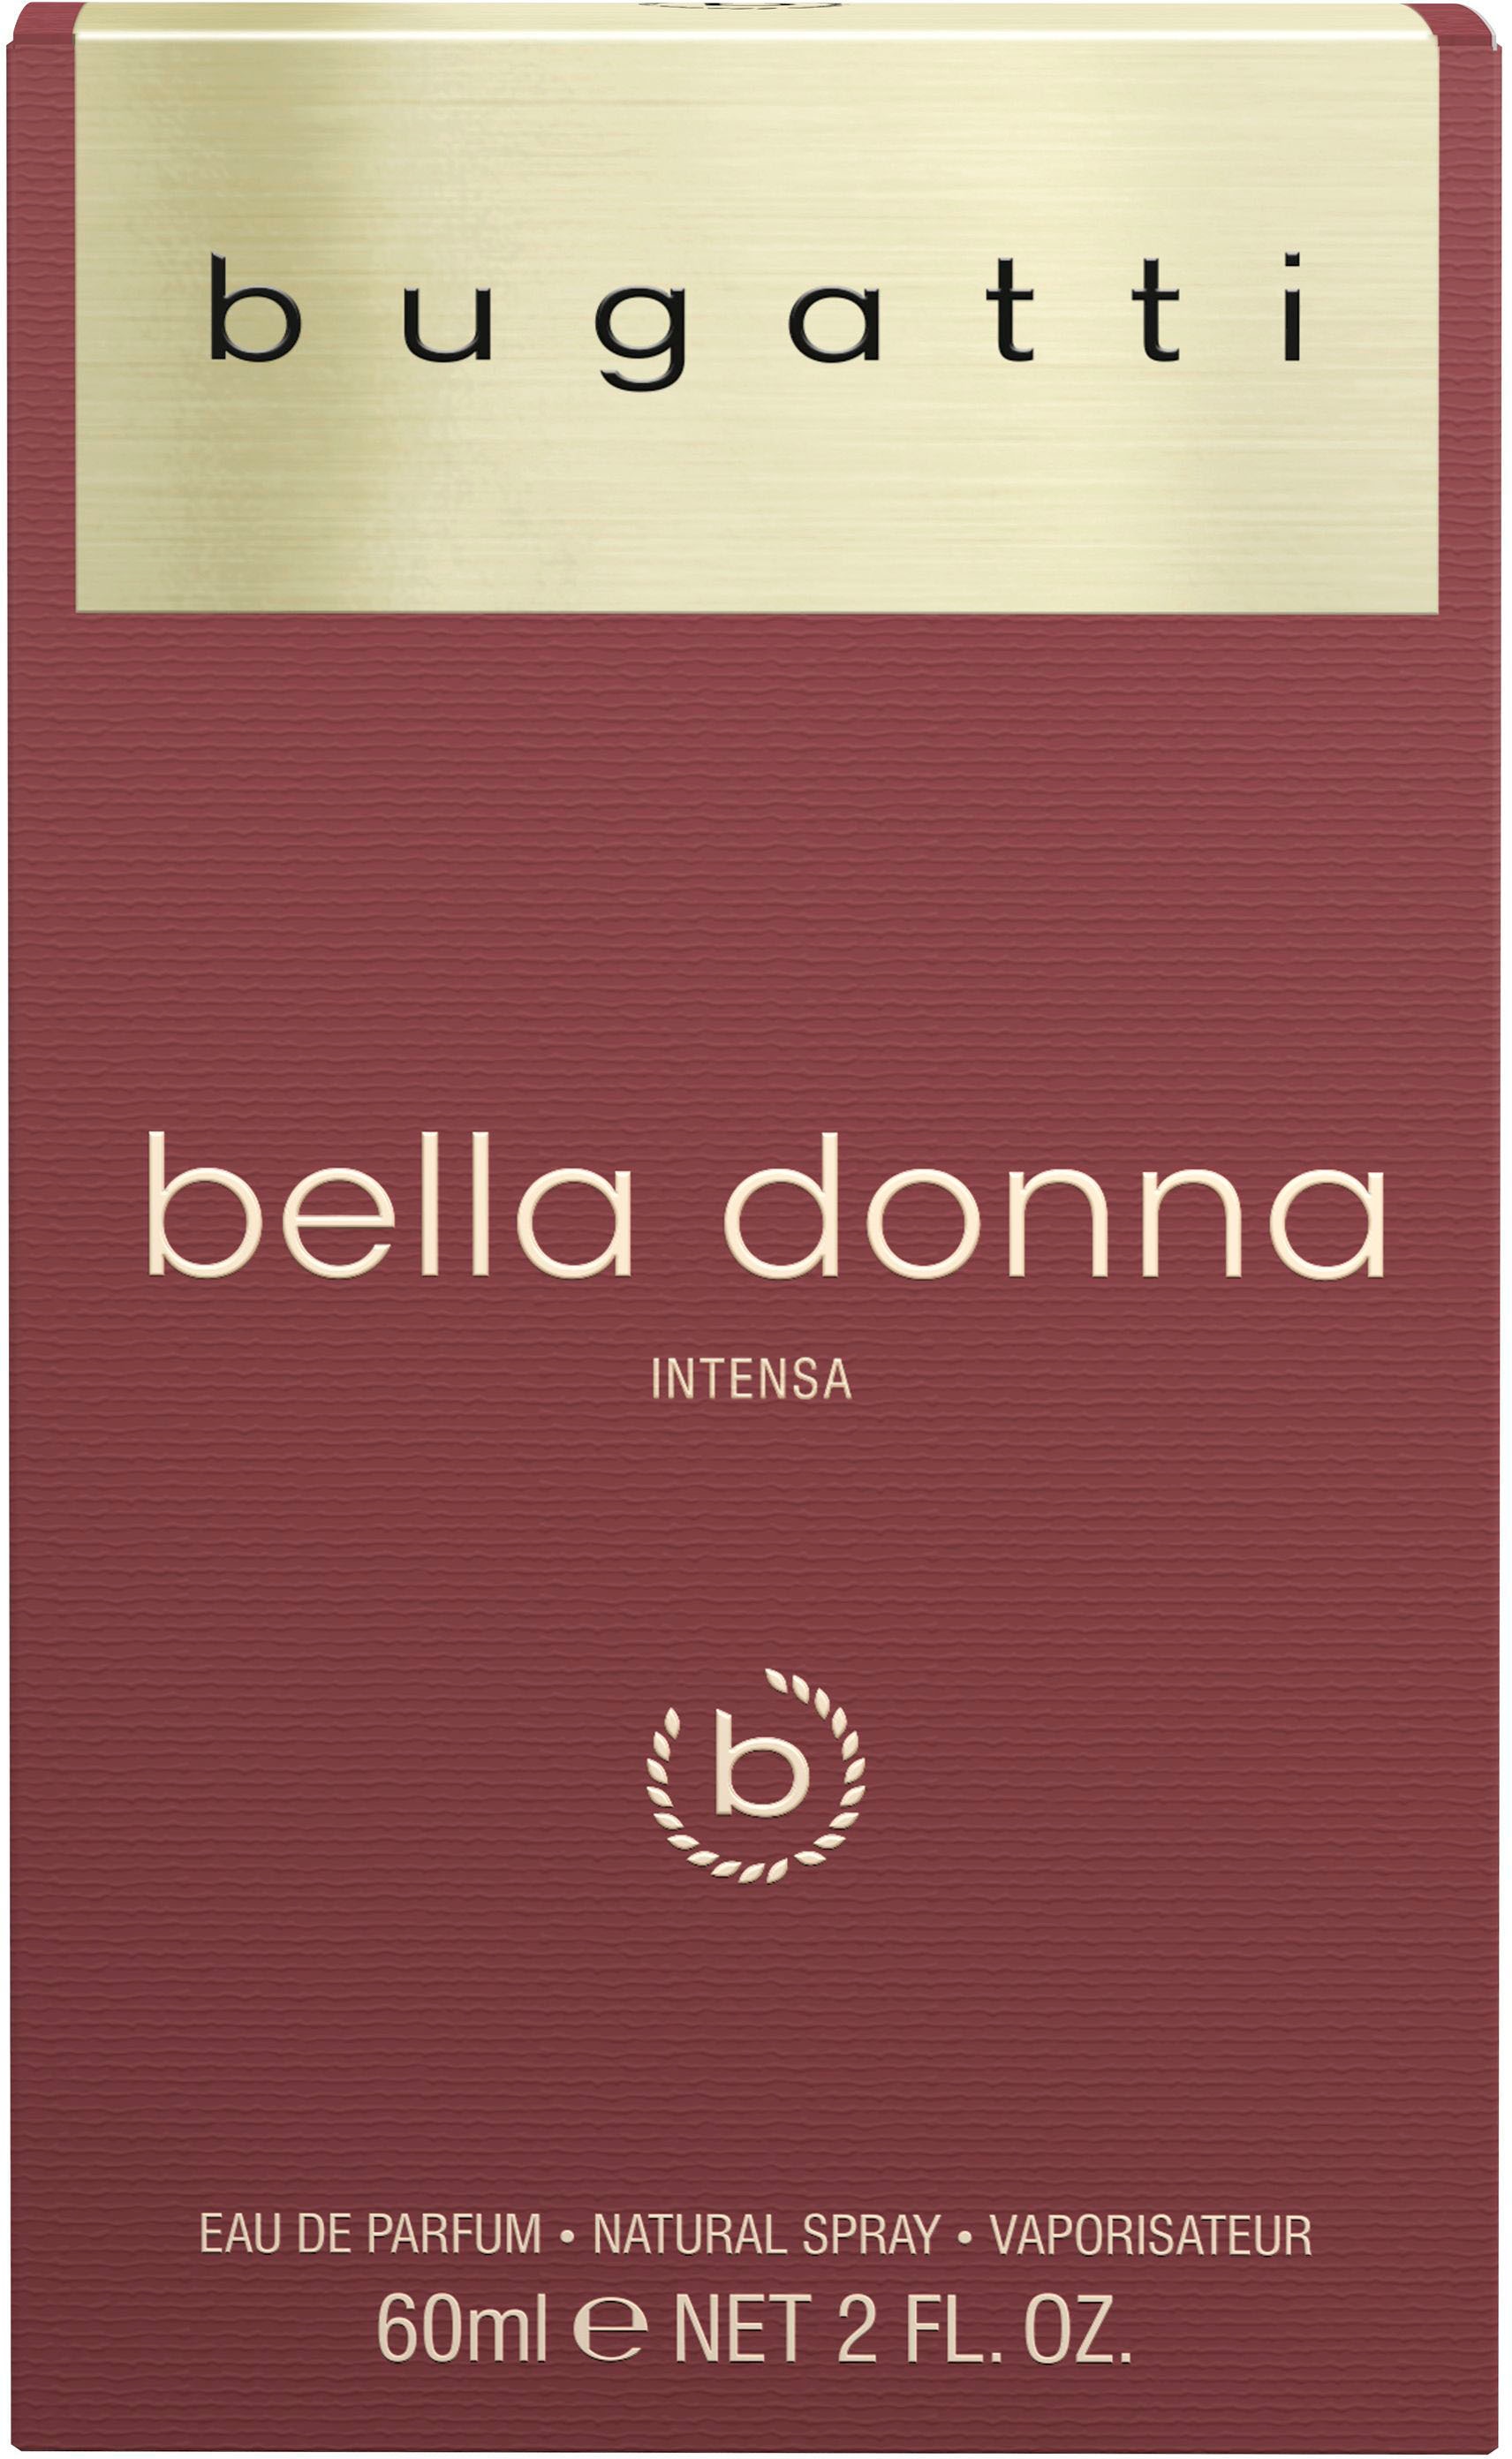 bugatti Eau Donna 60 intensa de OTTO »Bella online EdP Parfum ml« bei